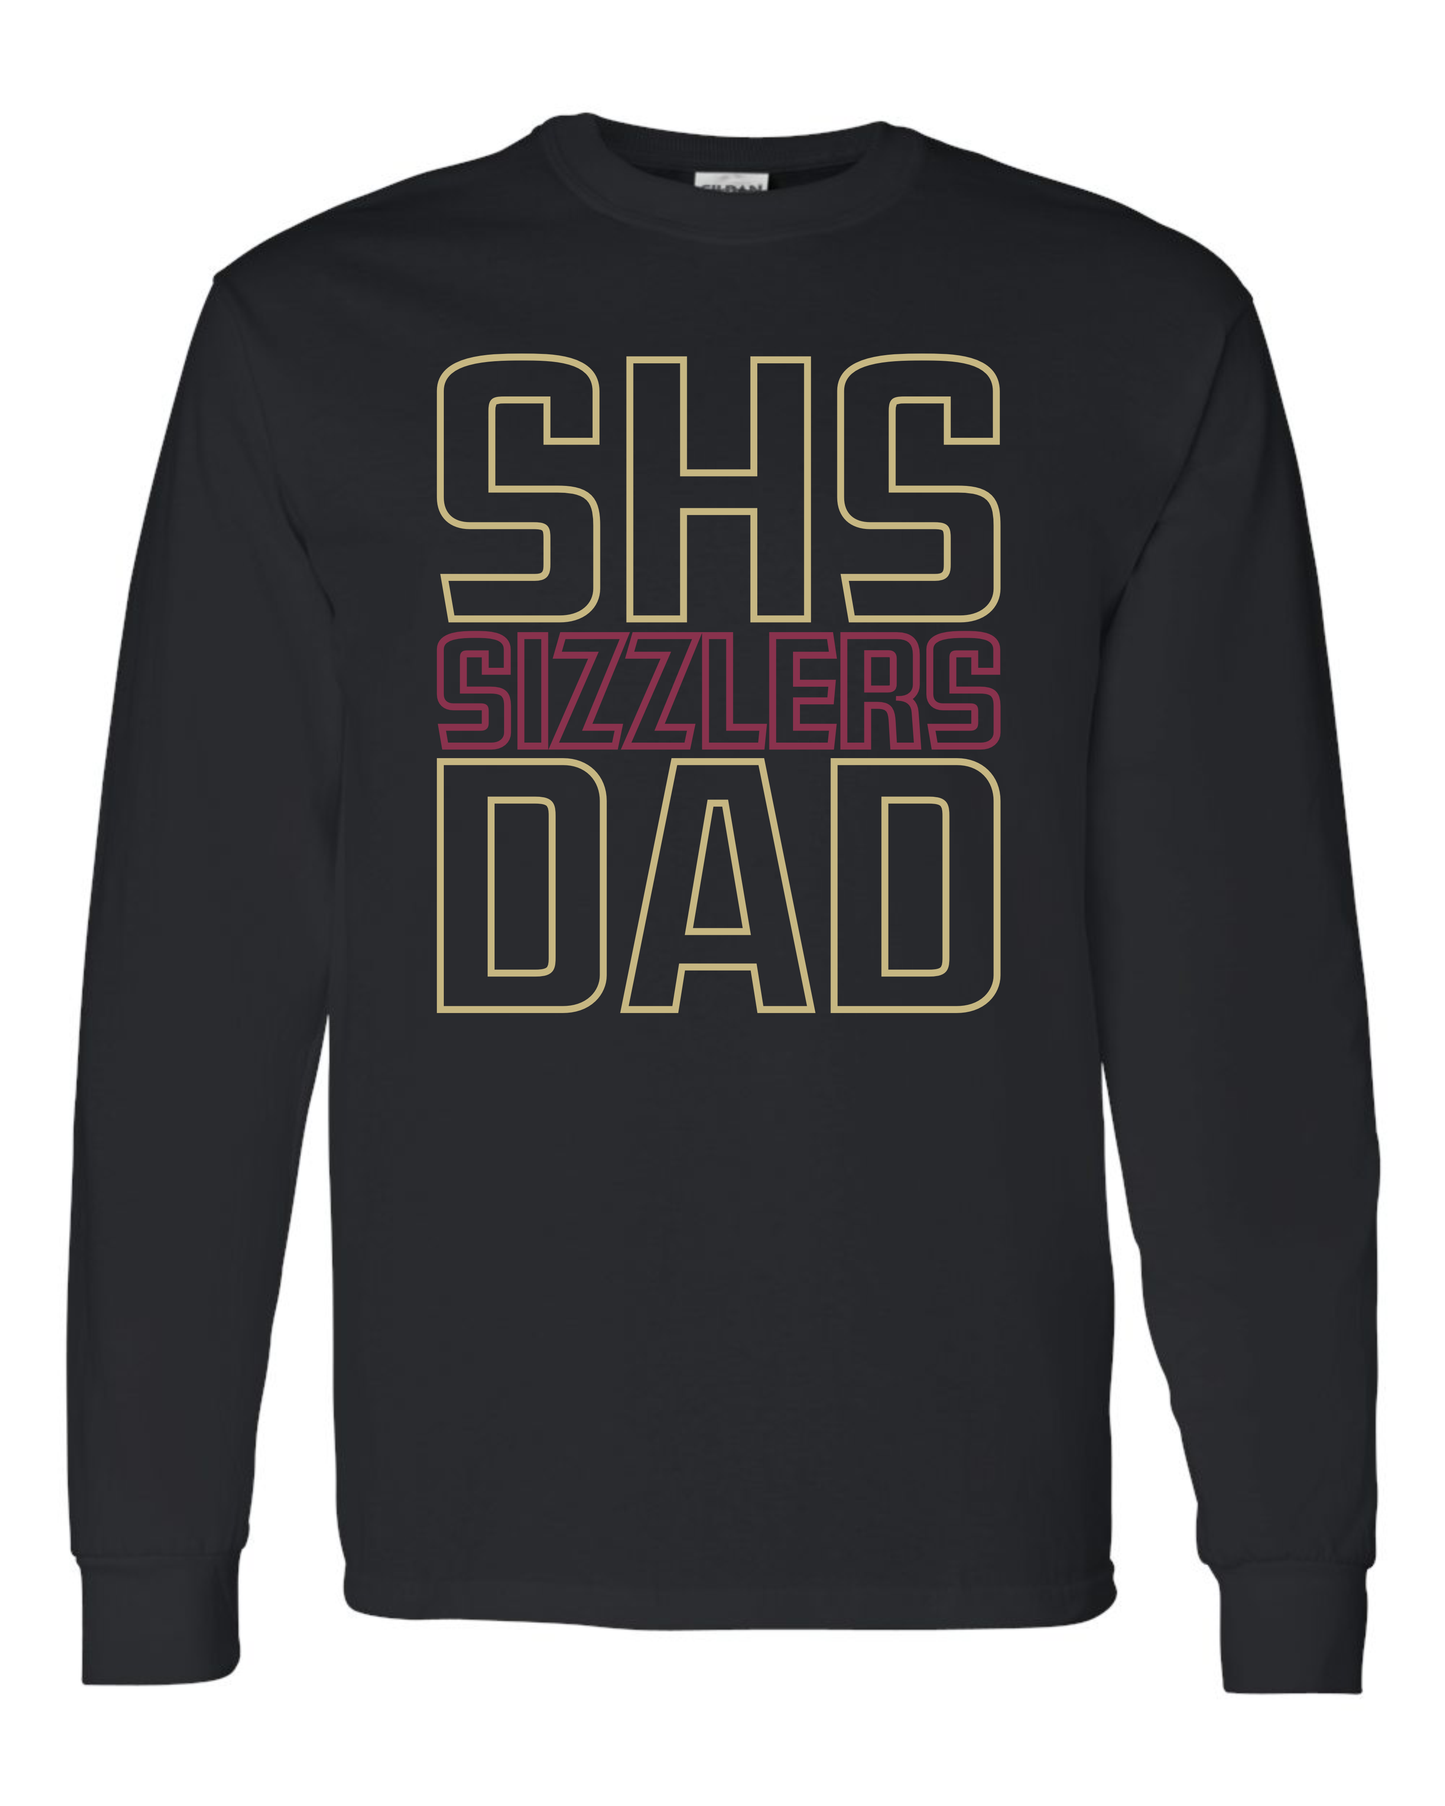 SHS Poms Dad Long Sleeve T-Shirt